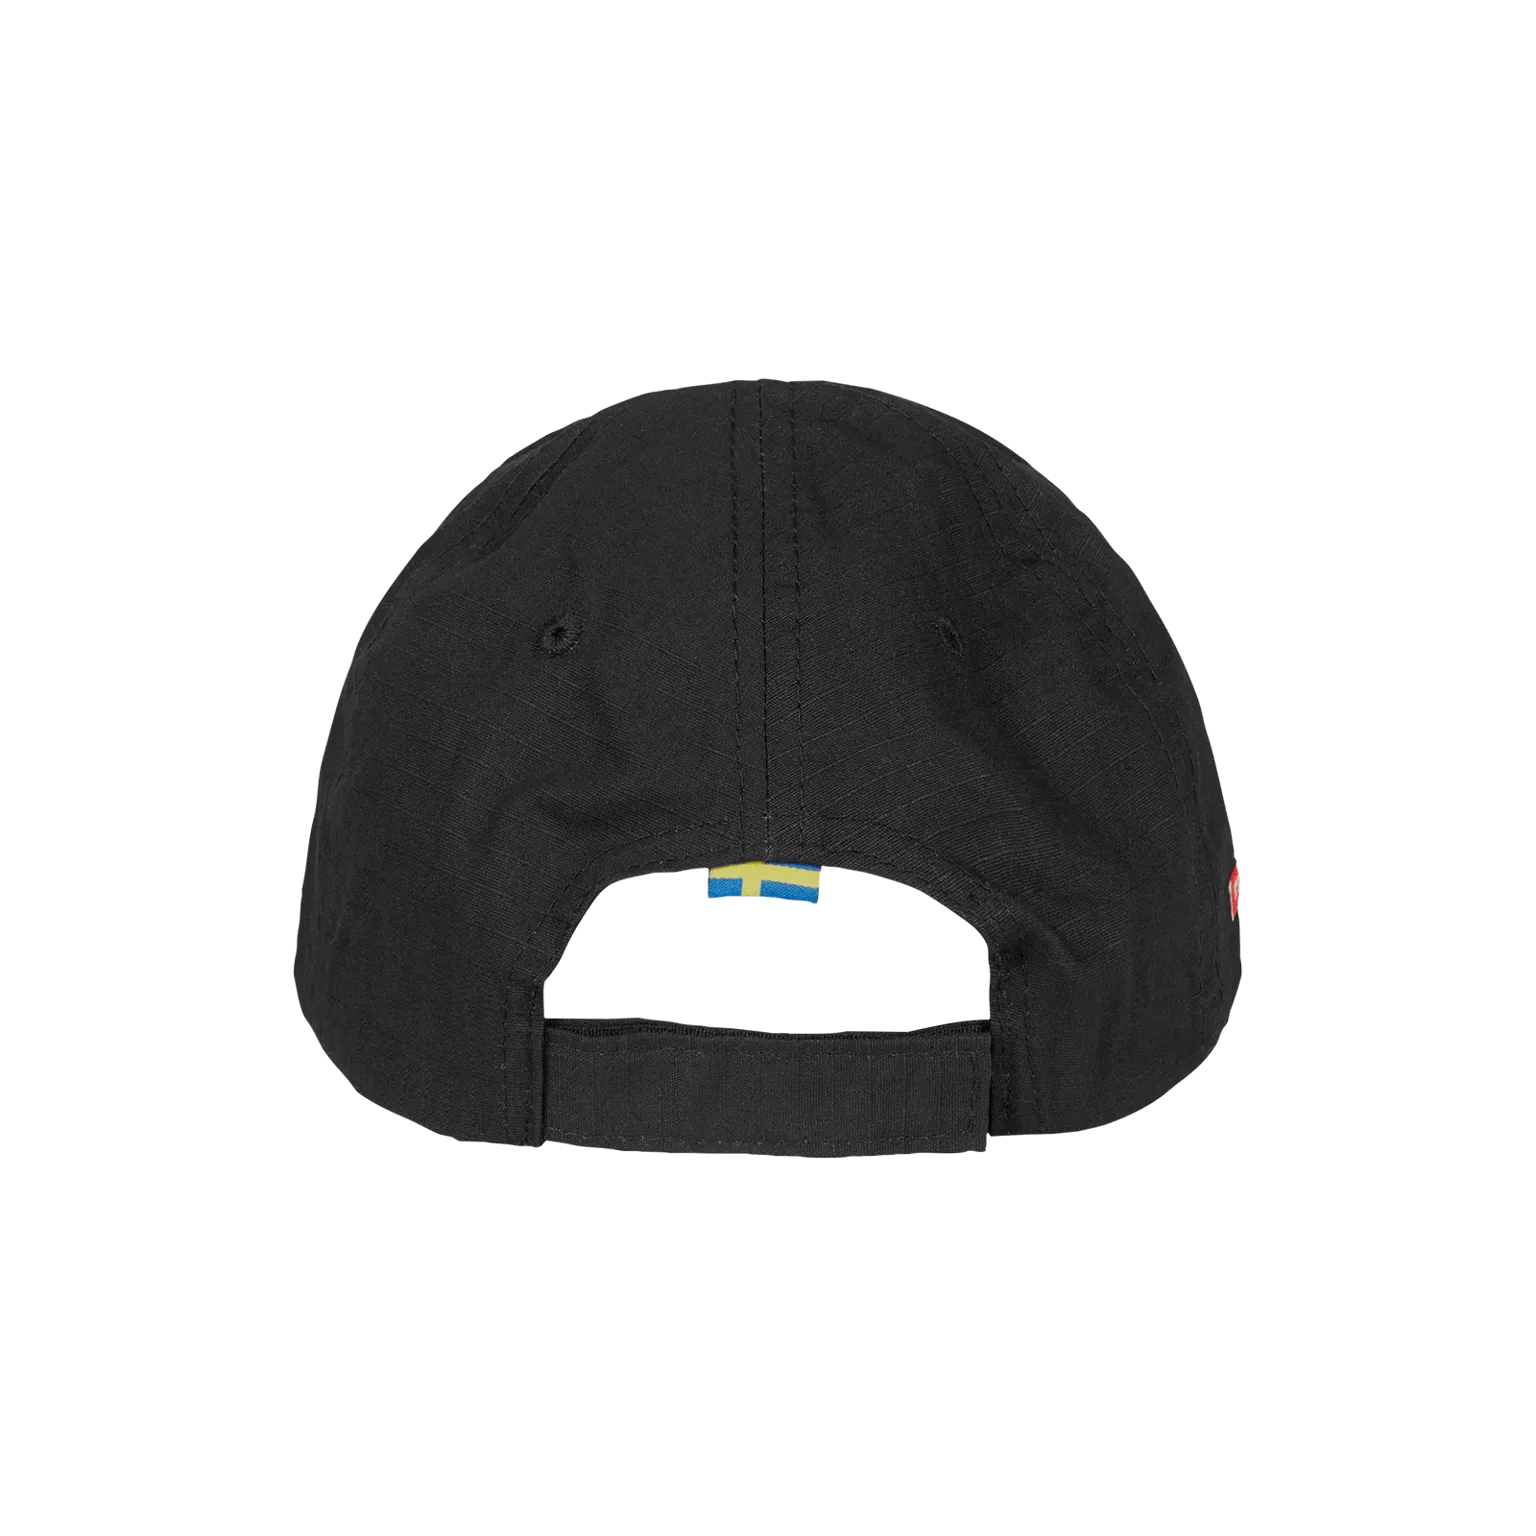 Aimpoint® Cap - Black Light weight cap  - 6